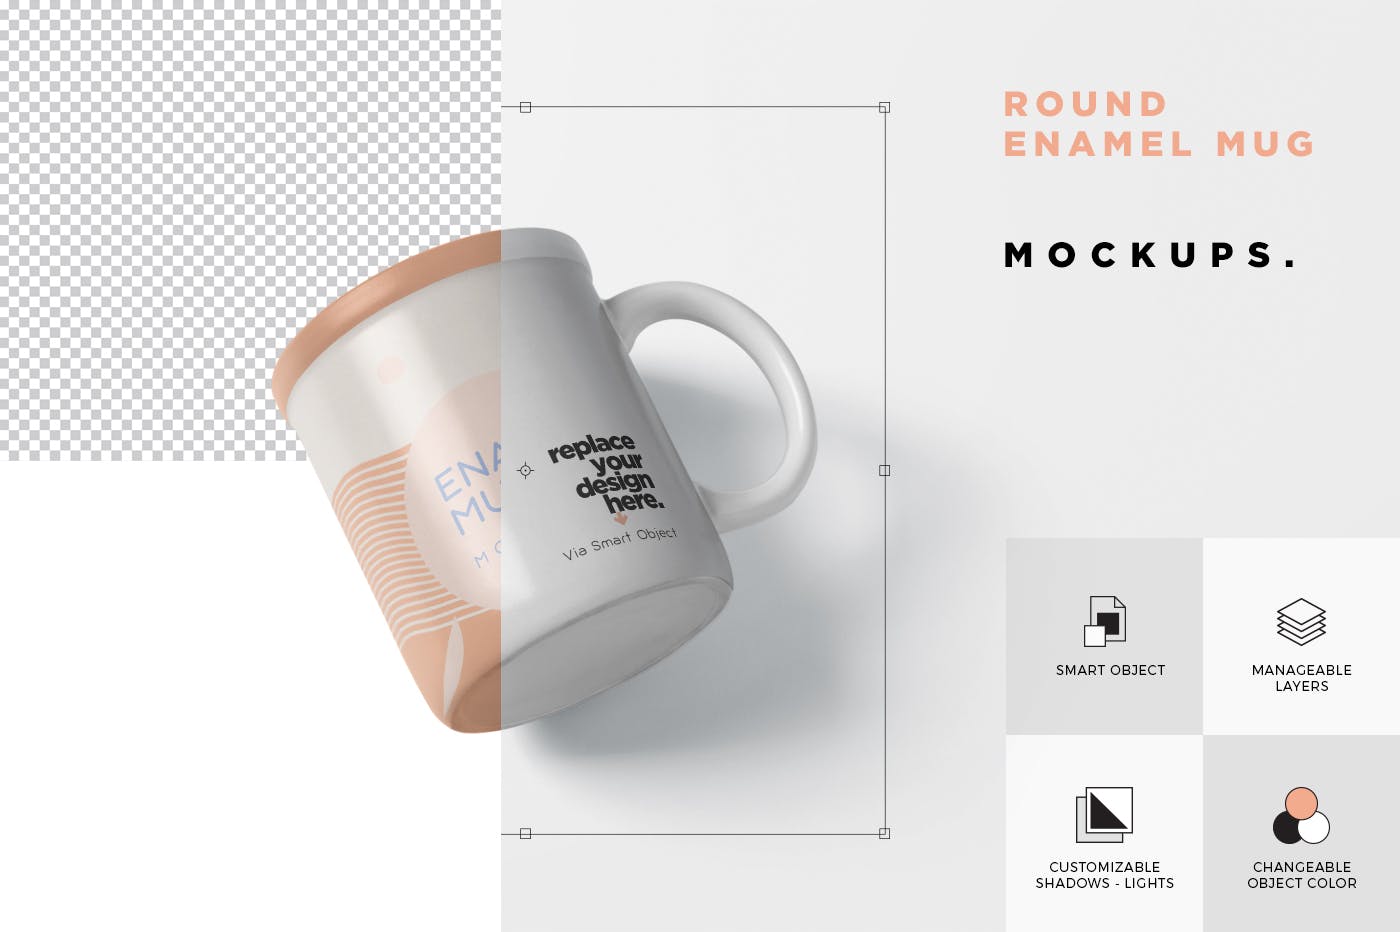 带把手圆形搪瓷杯马克杯图案设计第一素材精选 Round Enamel Mug Mockup With Handle插图(5)